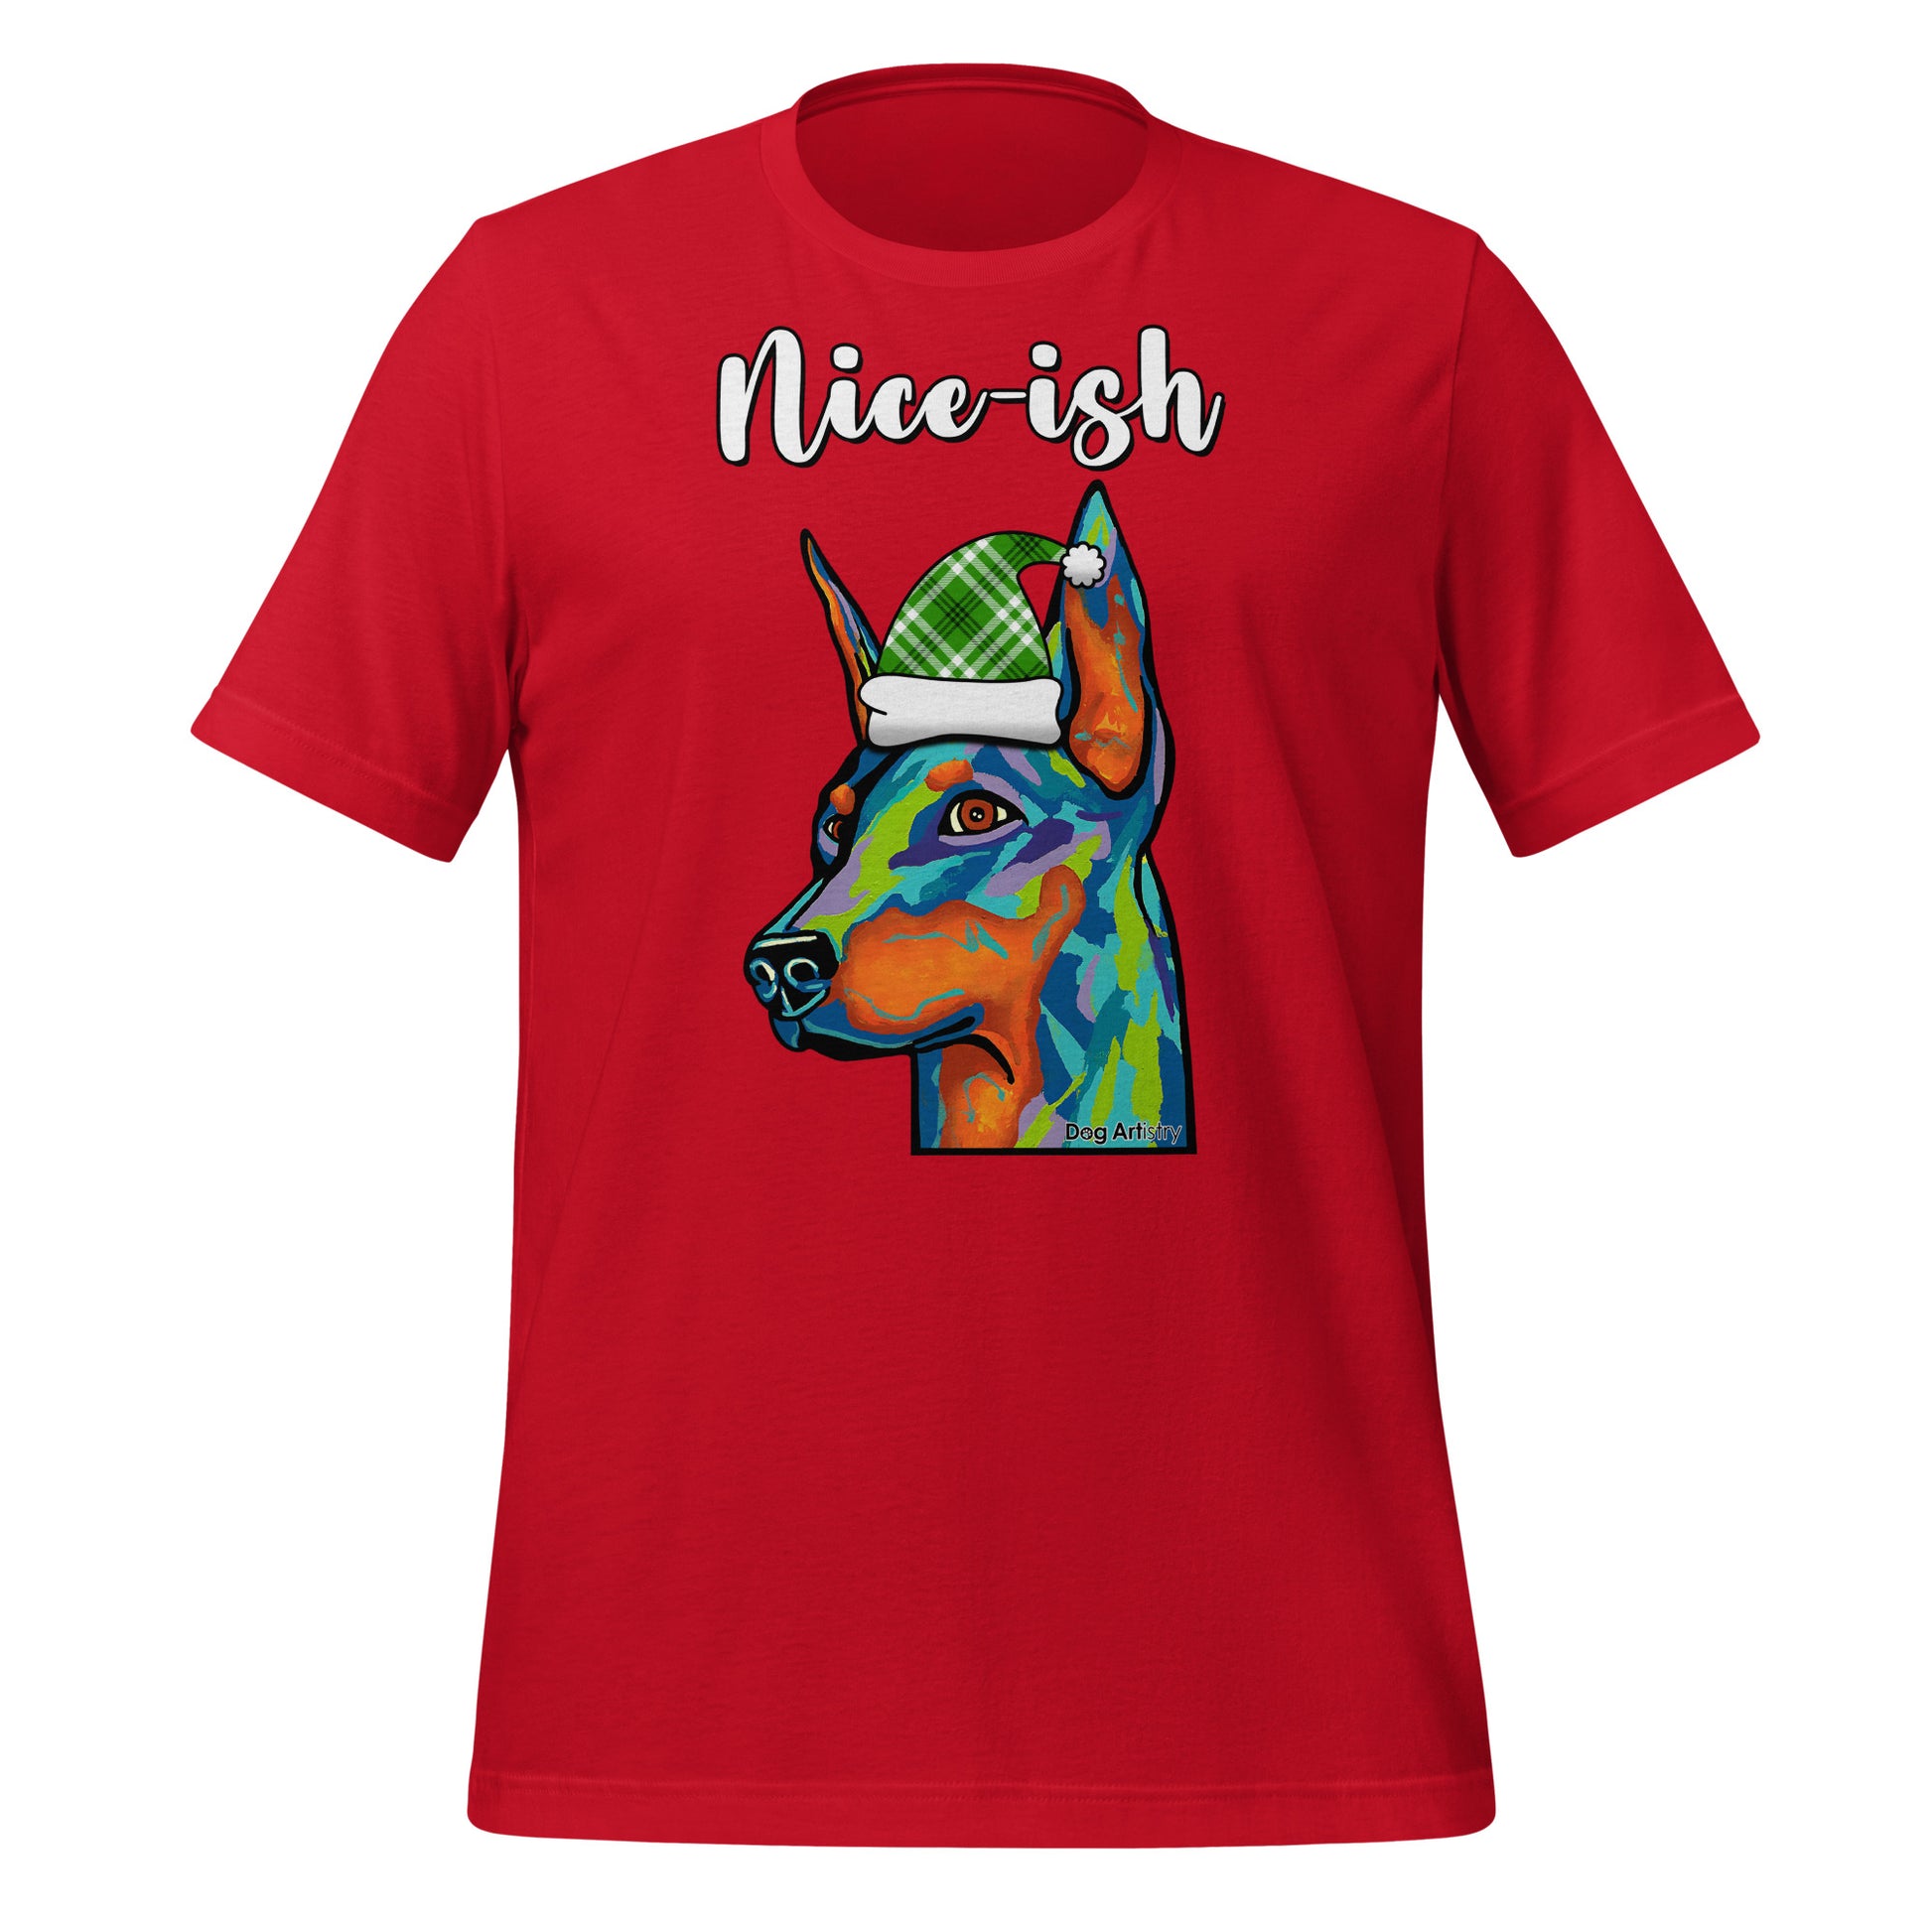 Nice-ish Doberman Pinscher unisex t-shirt red by Dog Artistry.